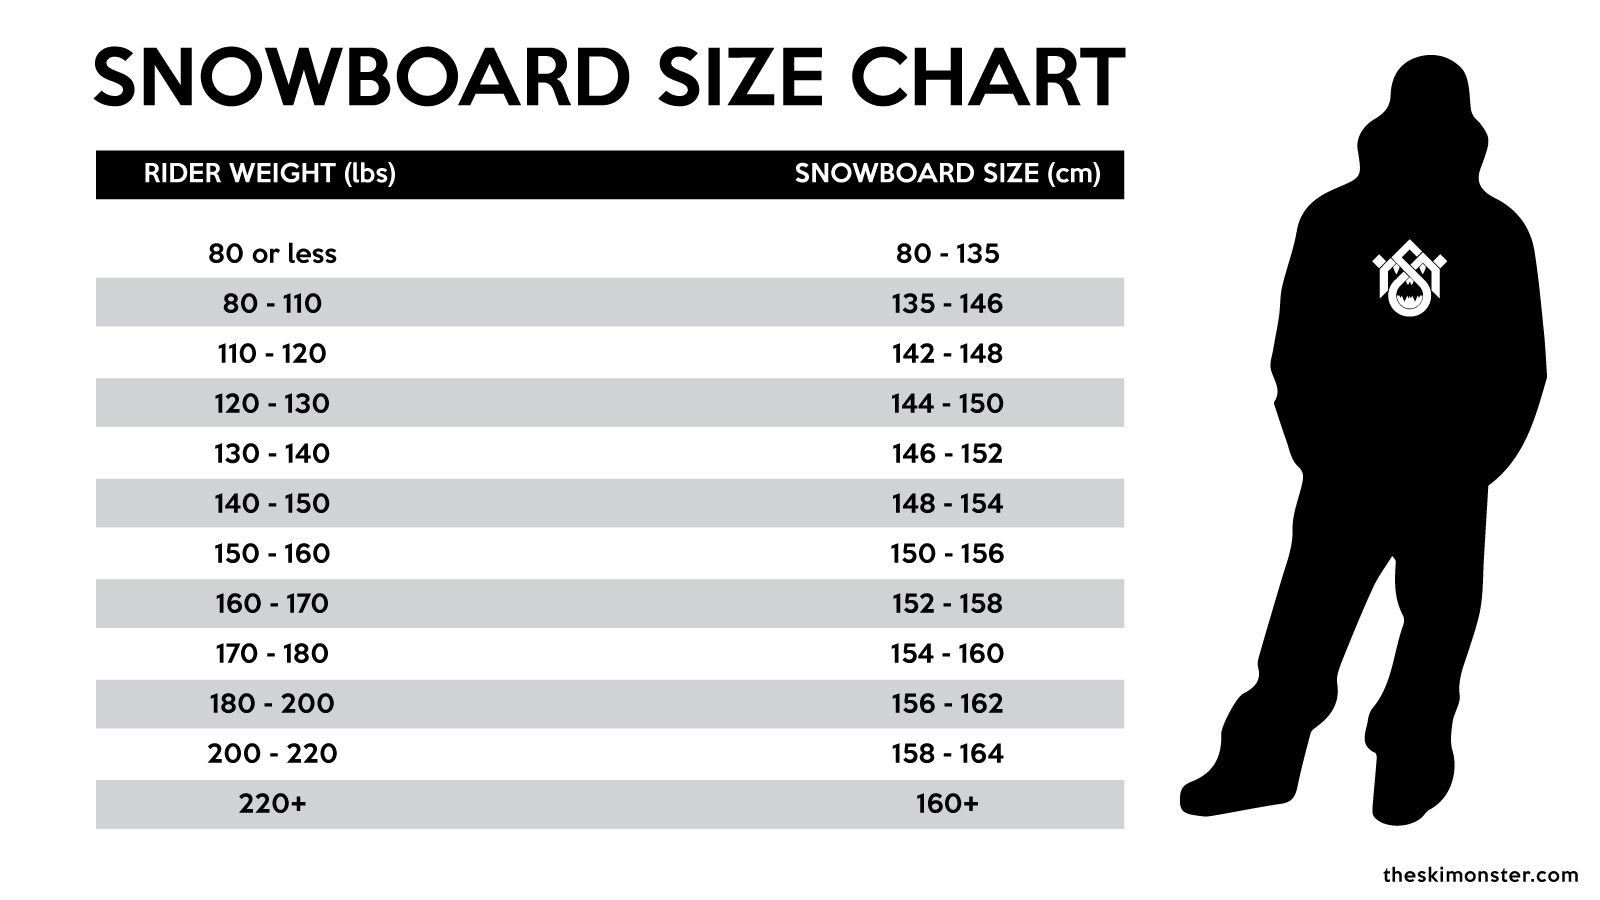 The Ski Monster Snowboard Size Chart